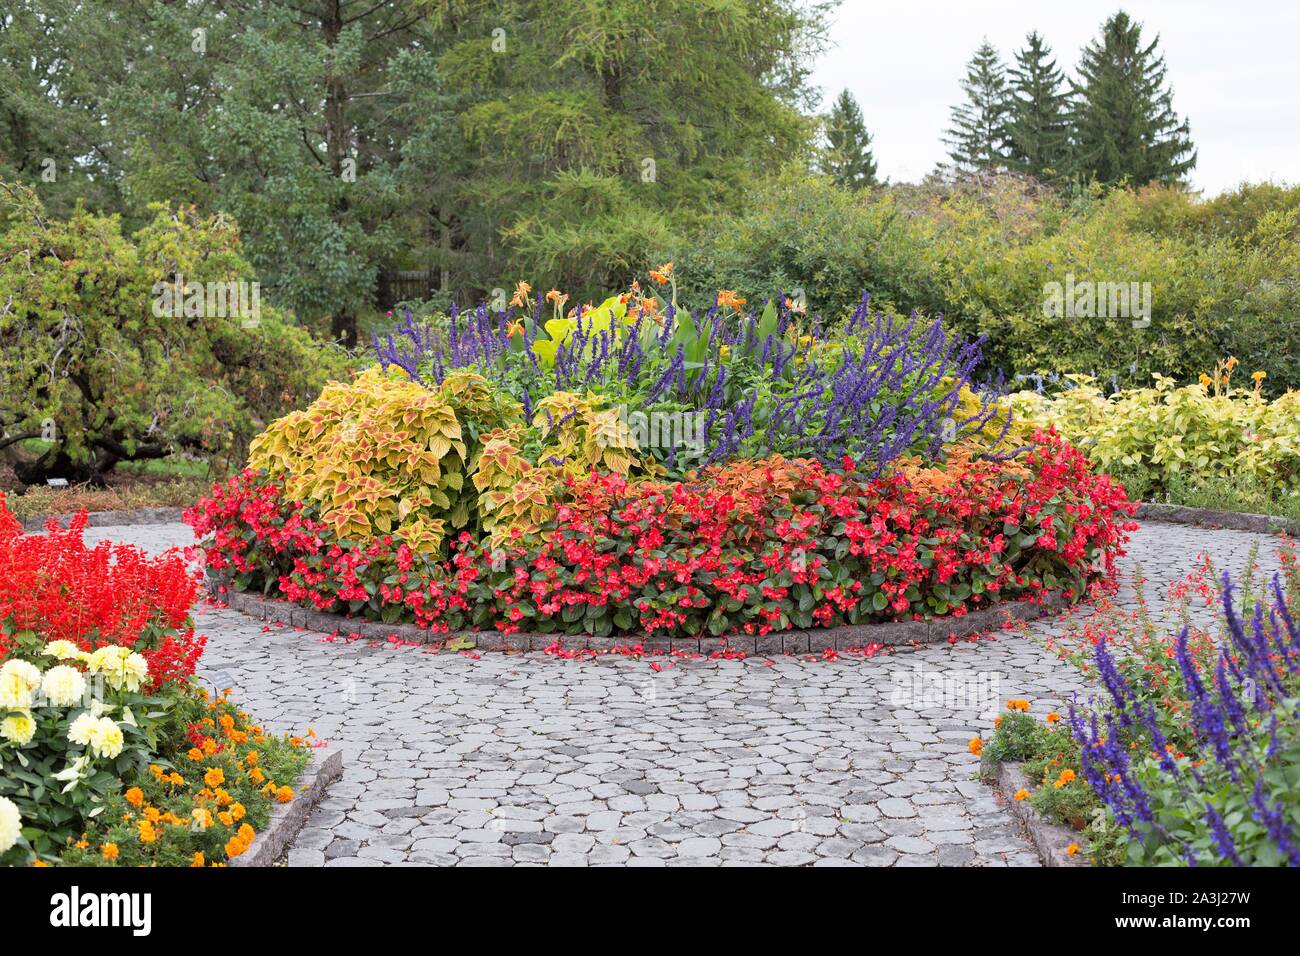 An outdoor autumn flower display at the Minnesota Landscape Arboretum in Chanhassen, Minnesota, USA. Stock Photo